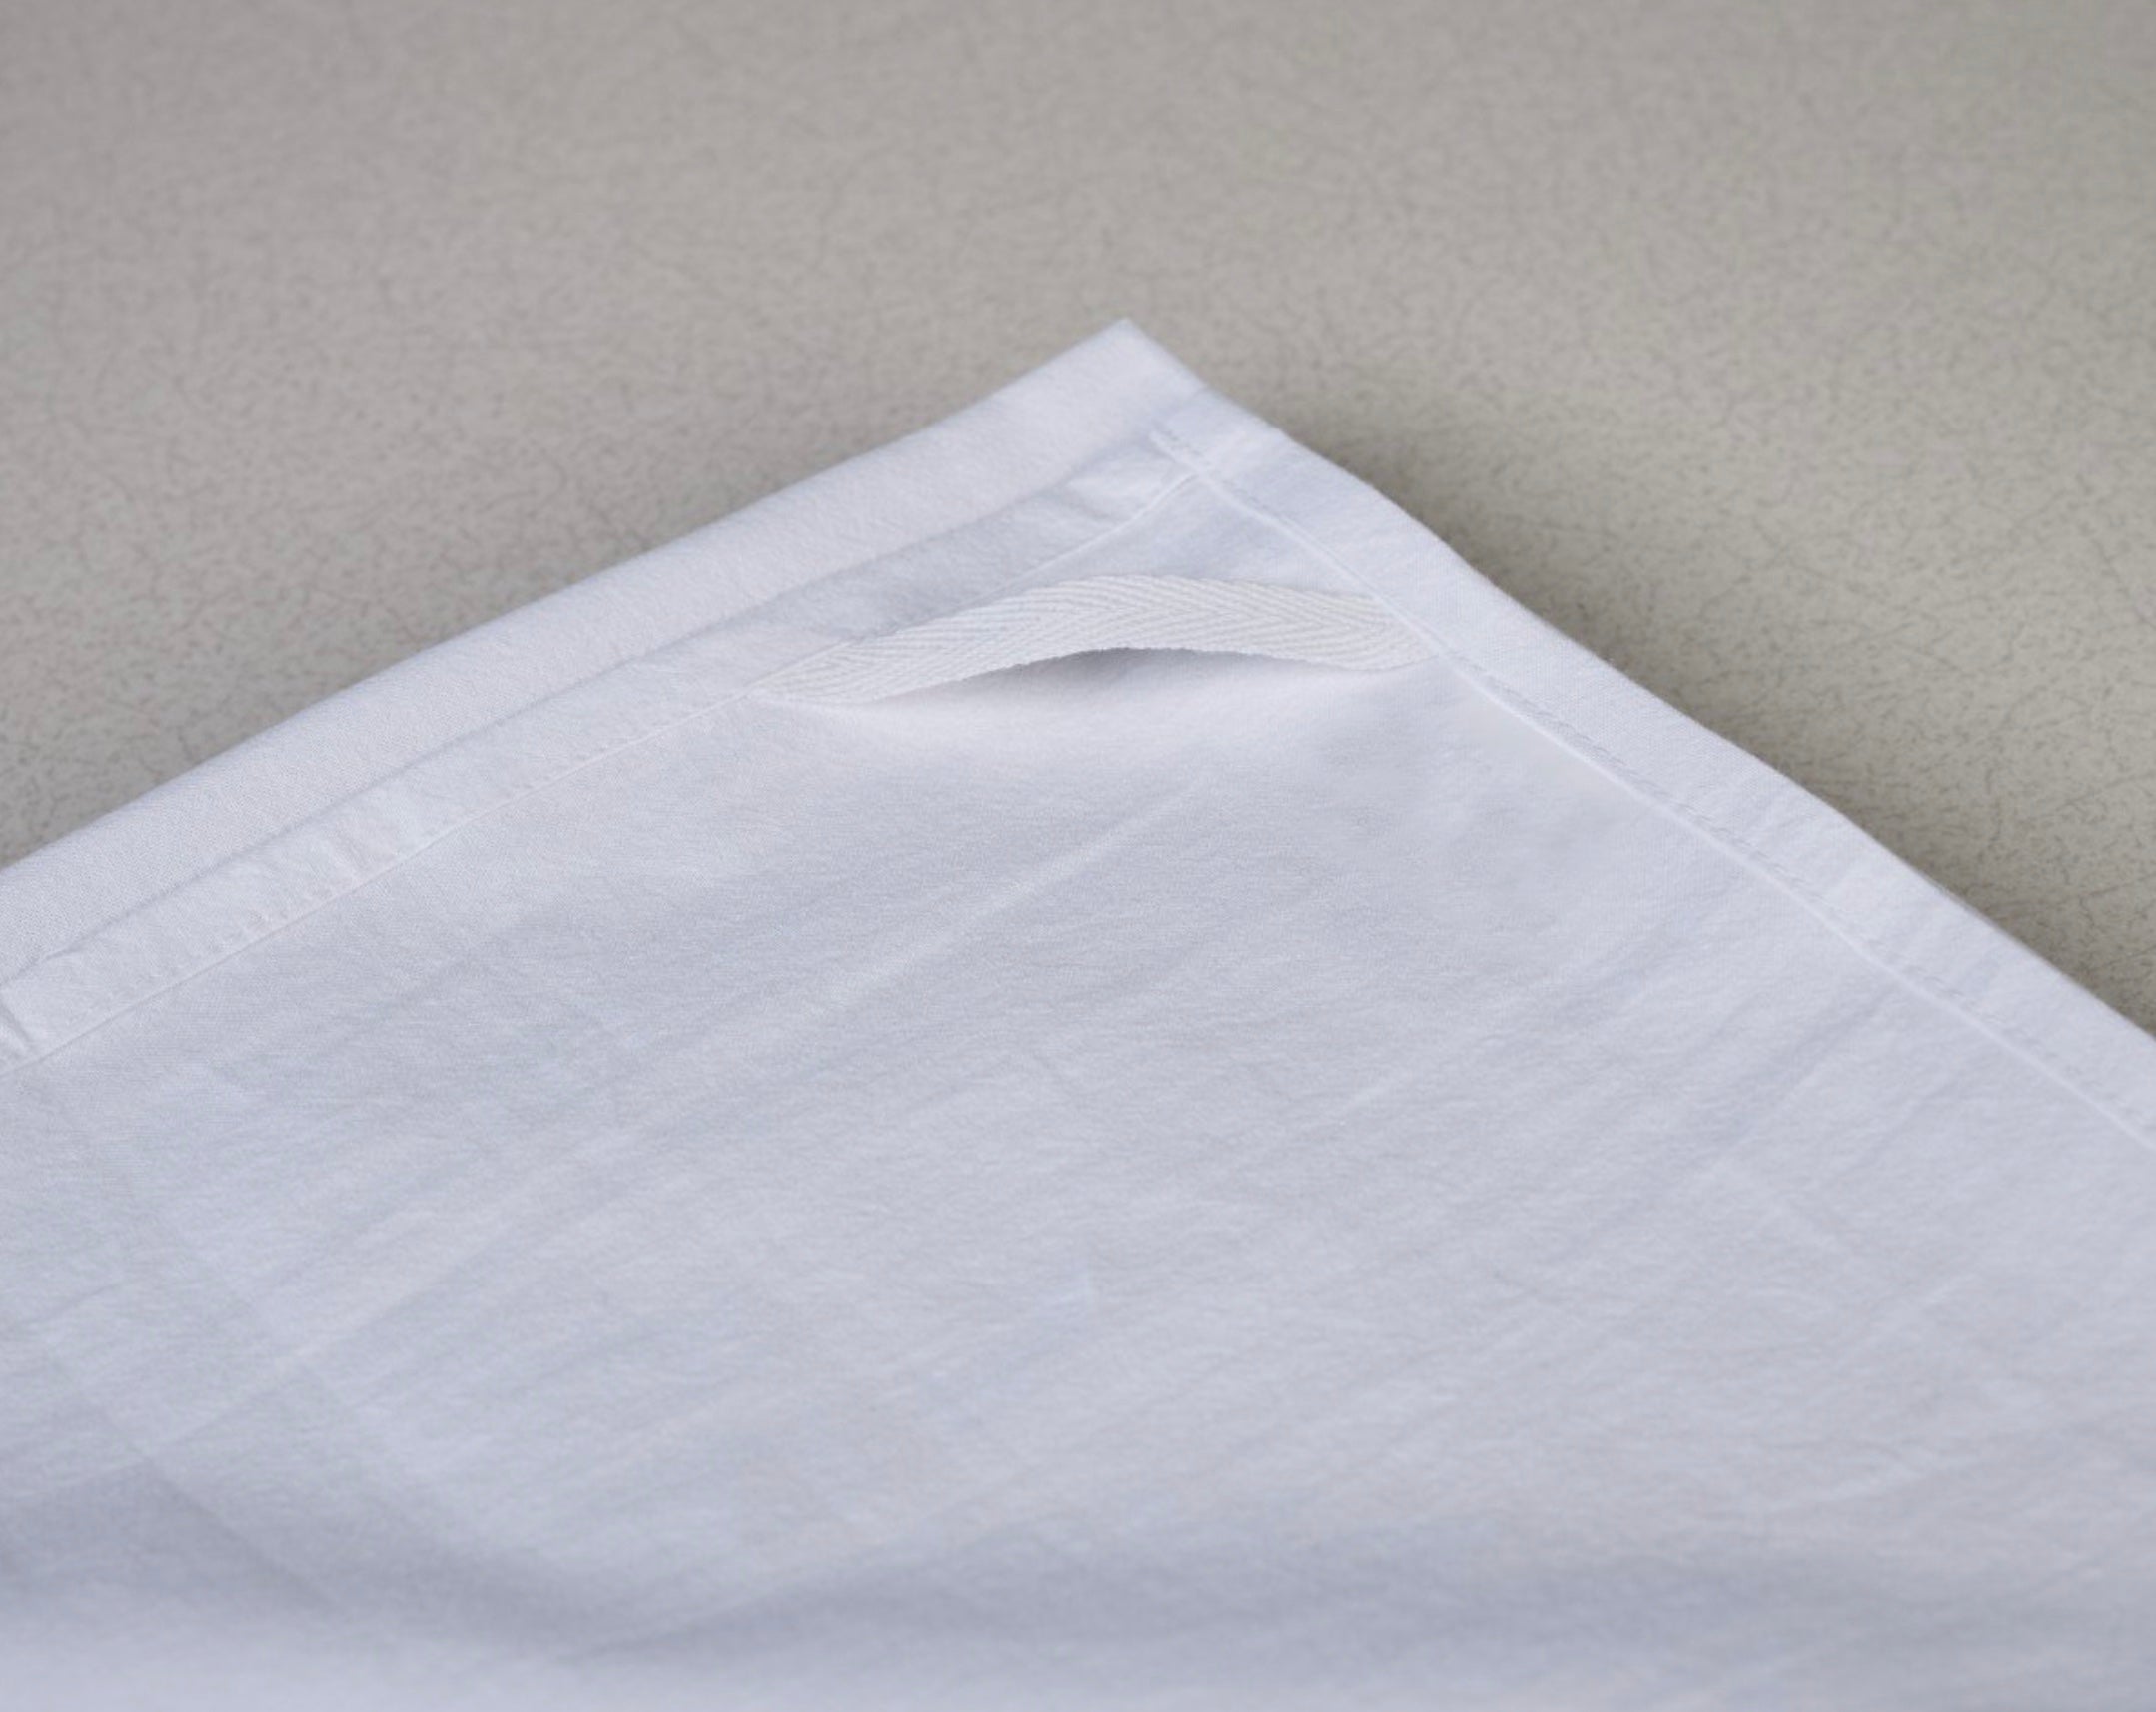 Now Designs Flour Sack Dish Towels - Gray White Moonstruck